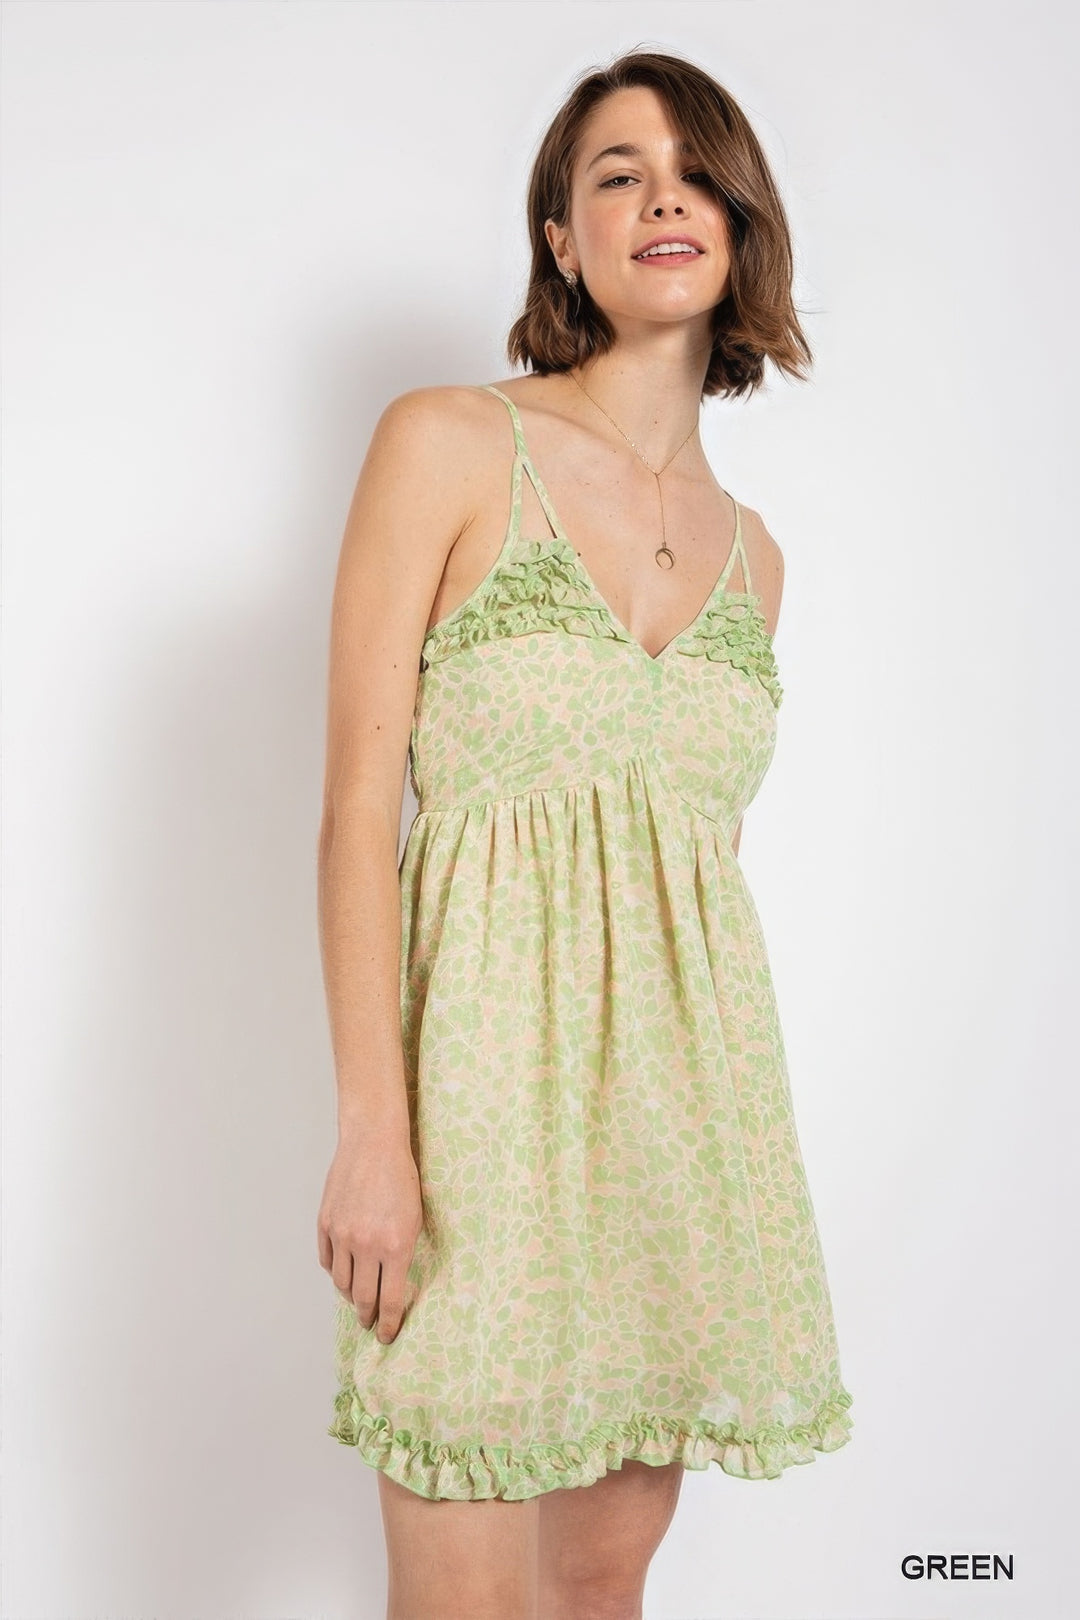 Floral Print V-Neck Dress with Skirt Lining - Elegant Green Design - Sizes S, M, L.